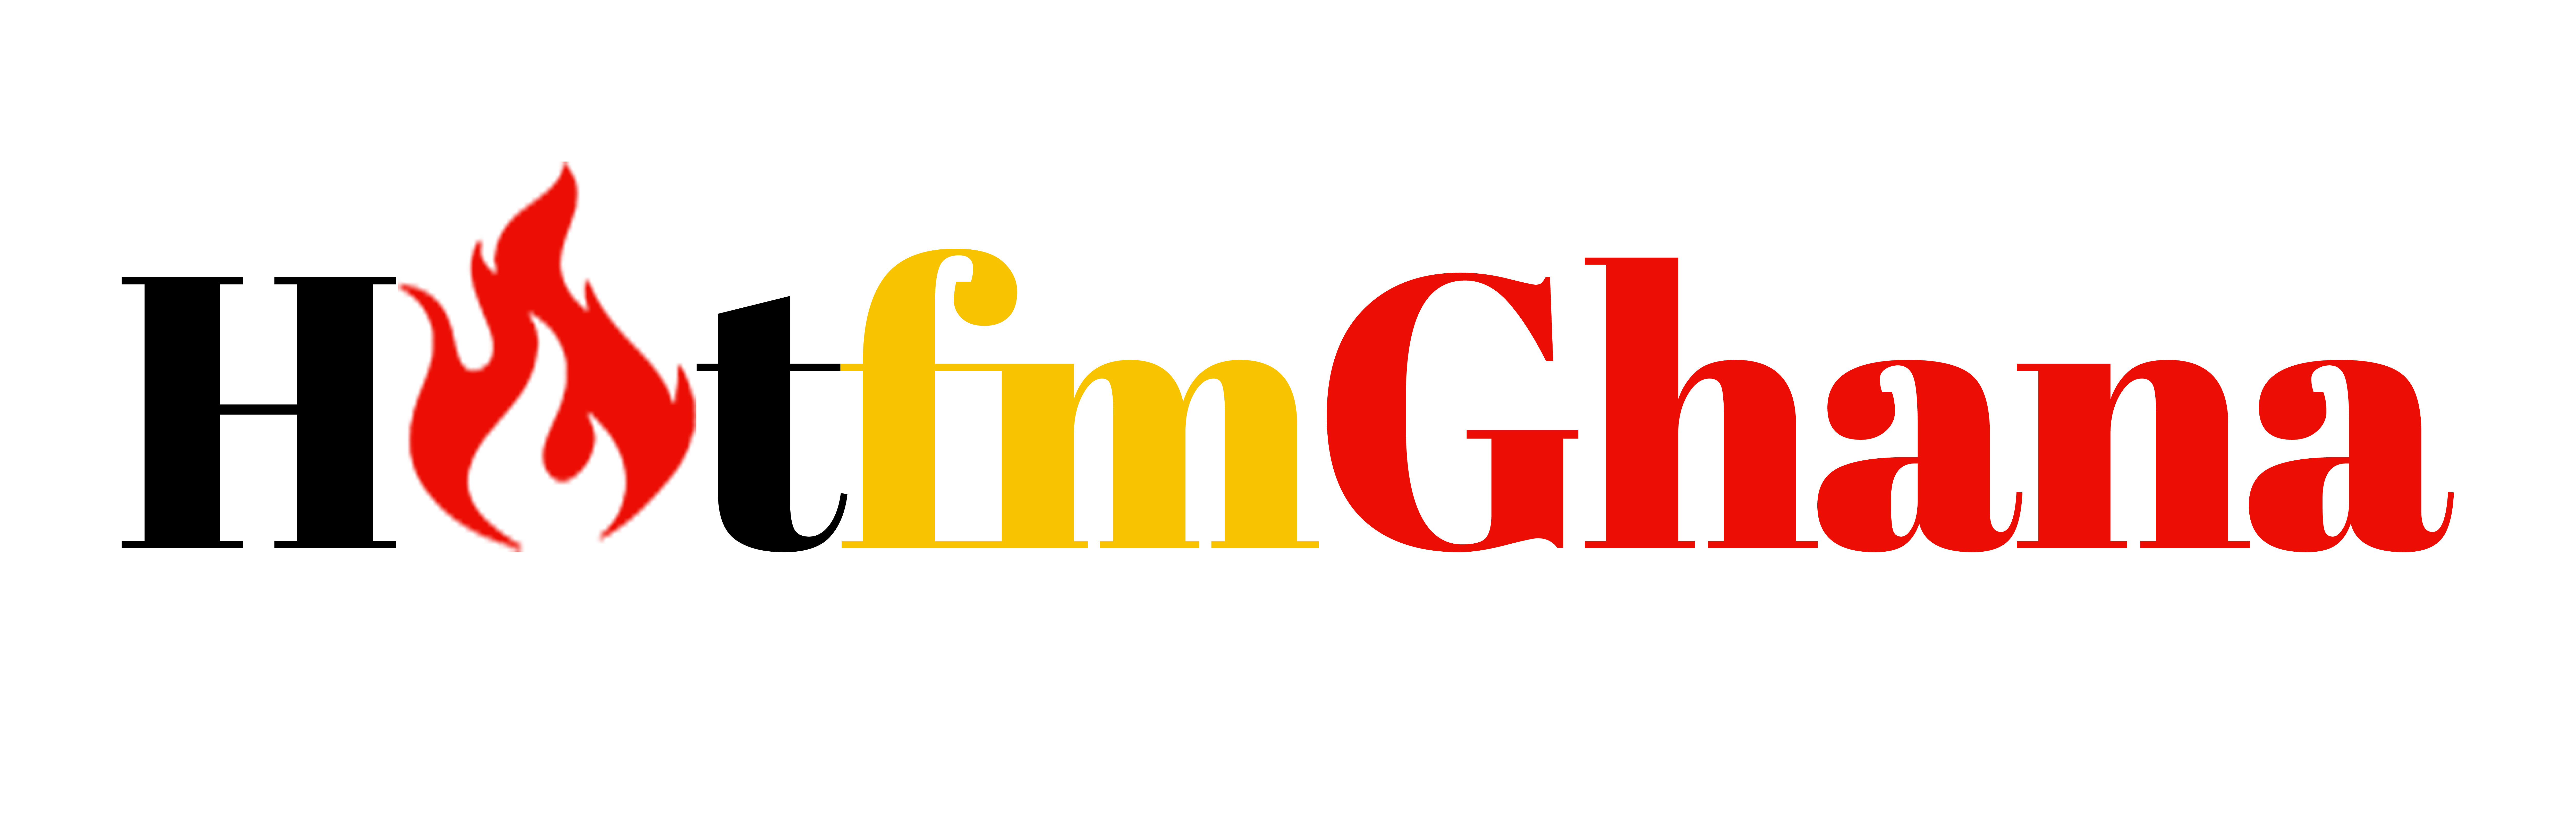 HotFm Ghana